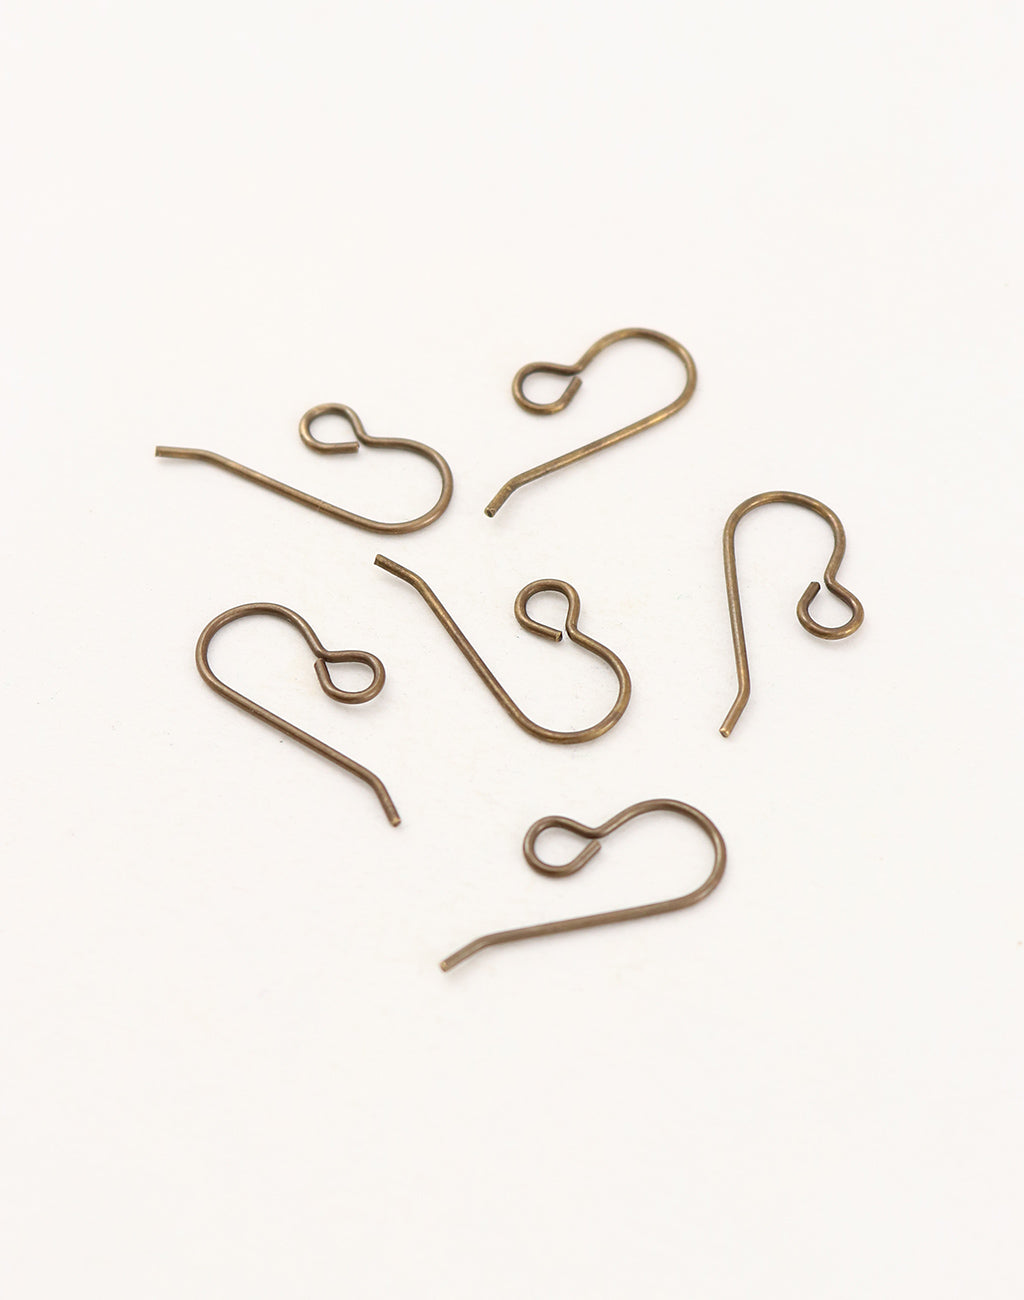 Earring Hooks / French Hook / Earwires / Dangle Earring (Gold / 20 pcs, MiniatureSweet, Kawaii Resin Crafts, Decoden Cabochons Supplies